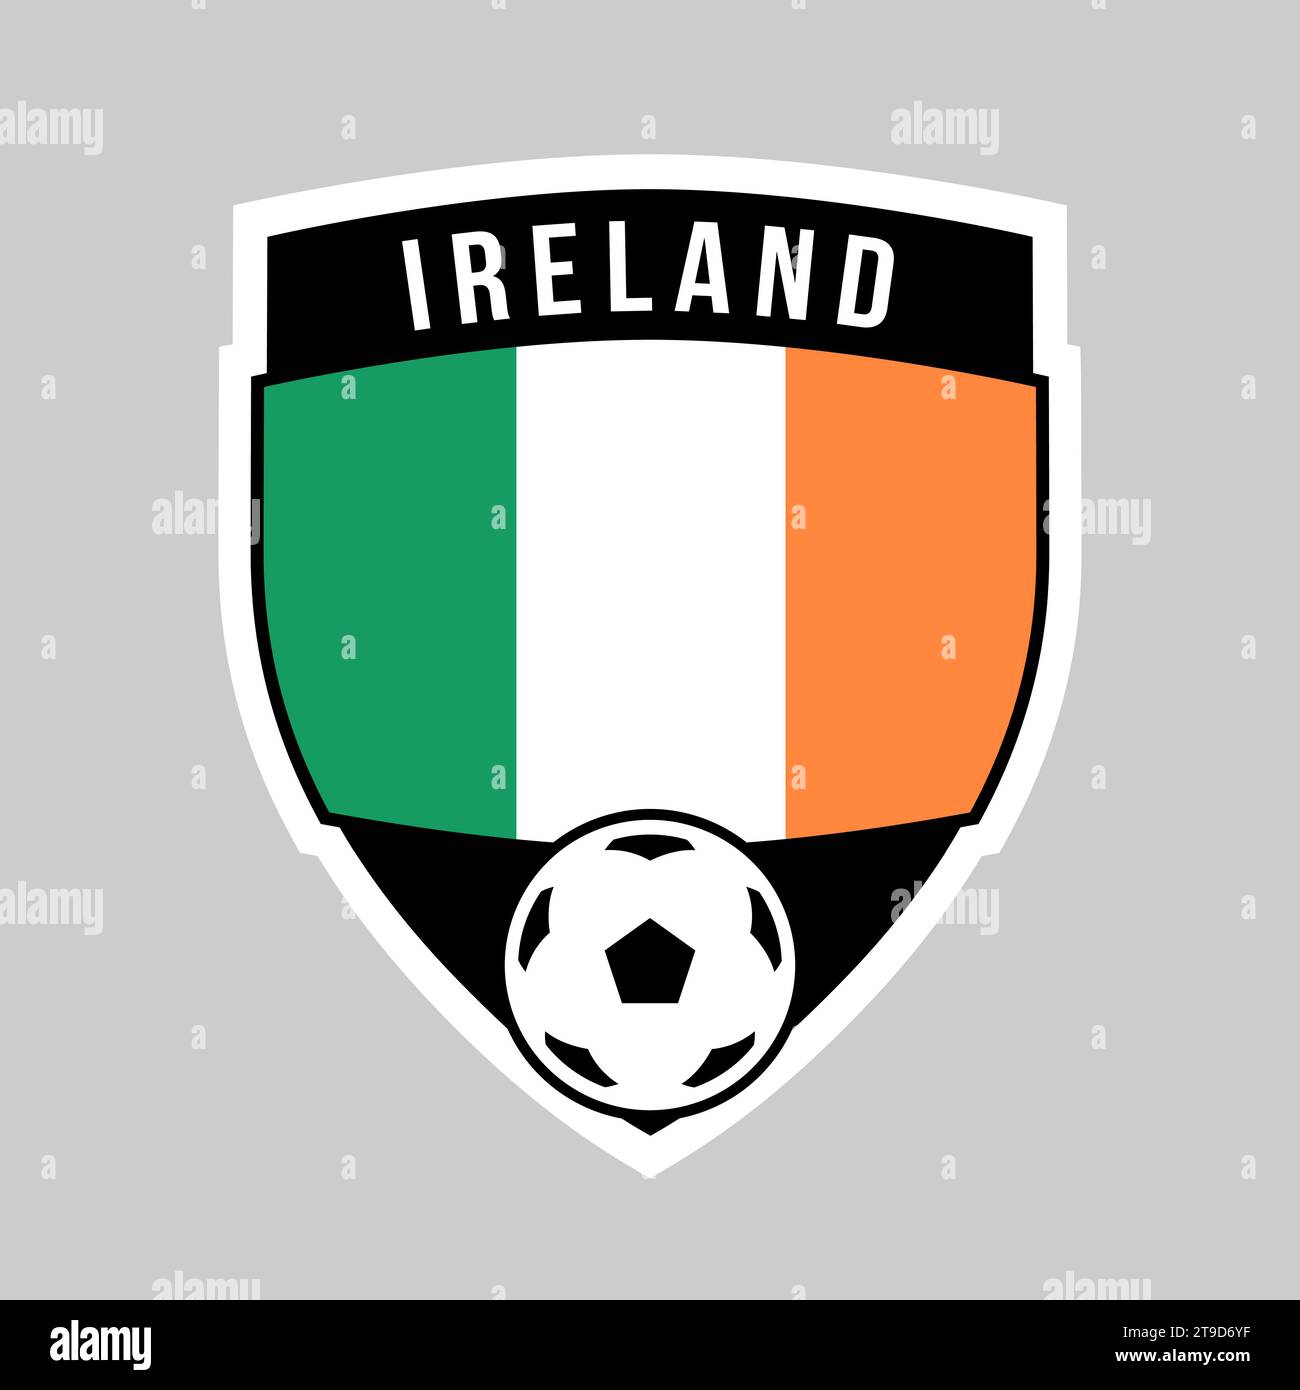 Illustration of Shield Team Badge of Ireland for Football Tournament Stock Vector